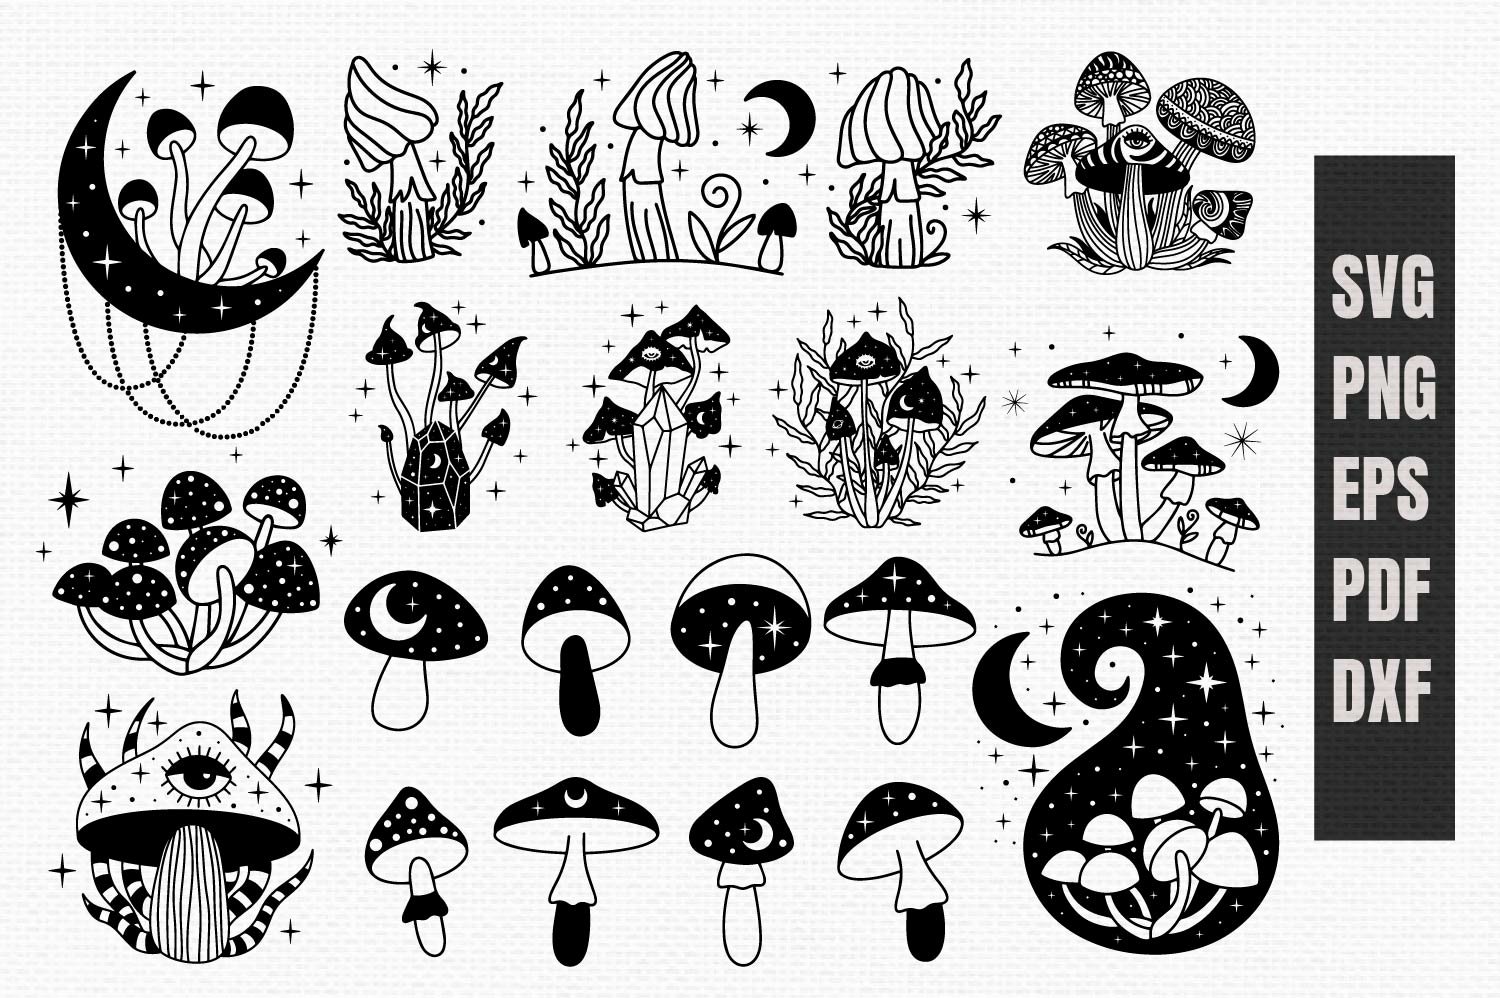 trippy mushroom art black and white